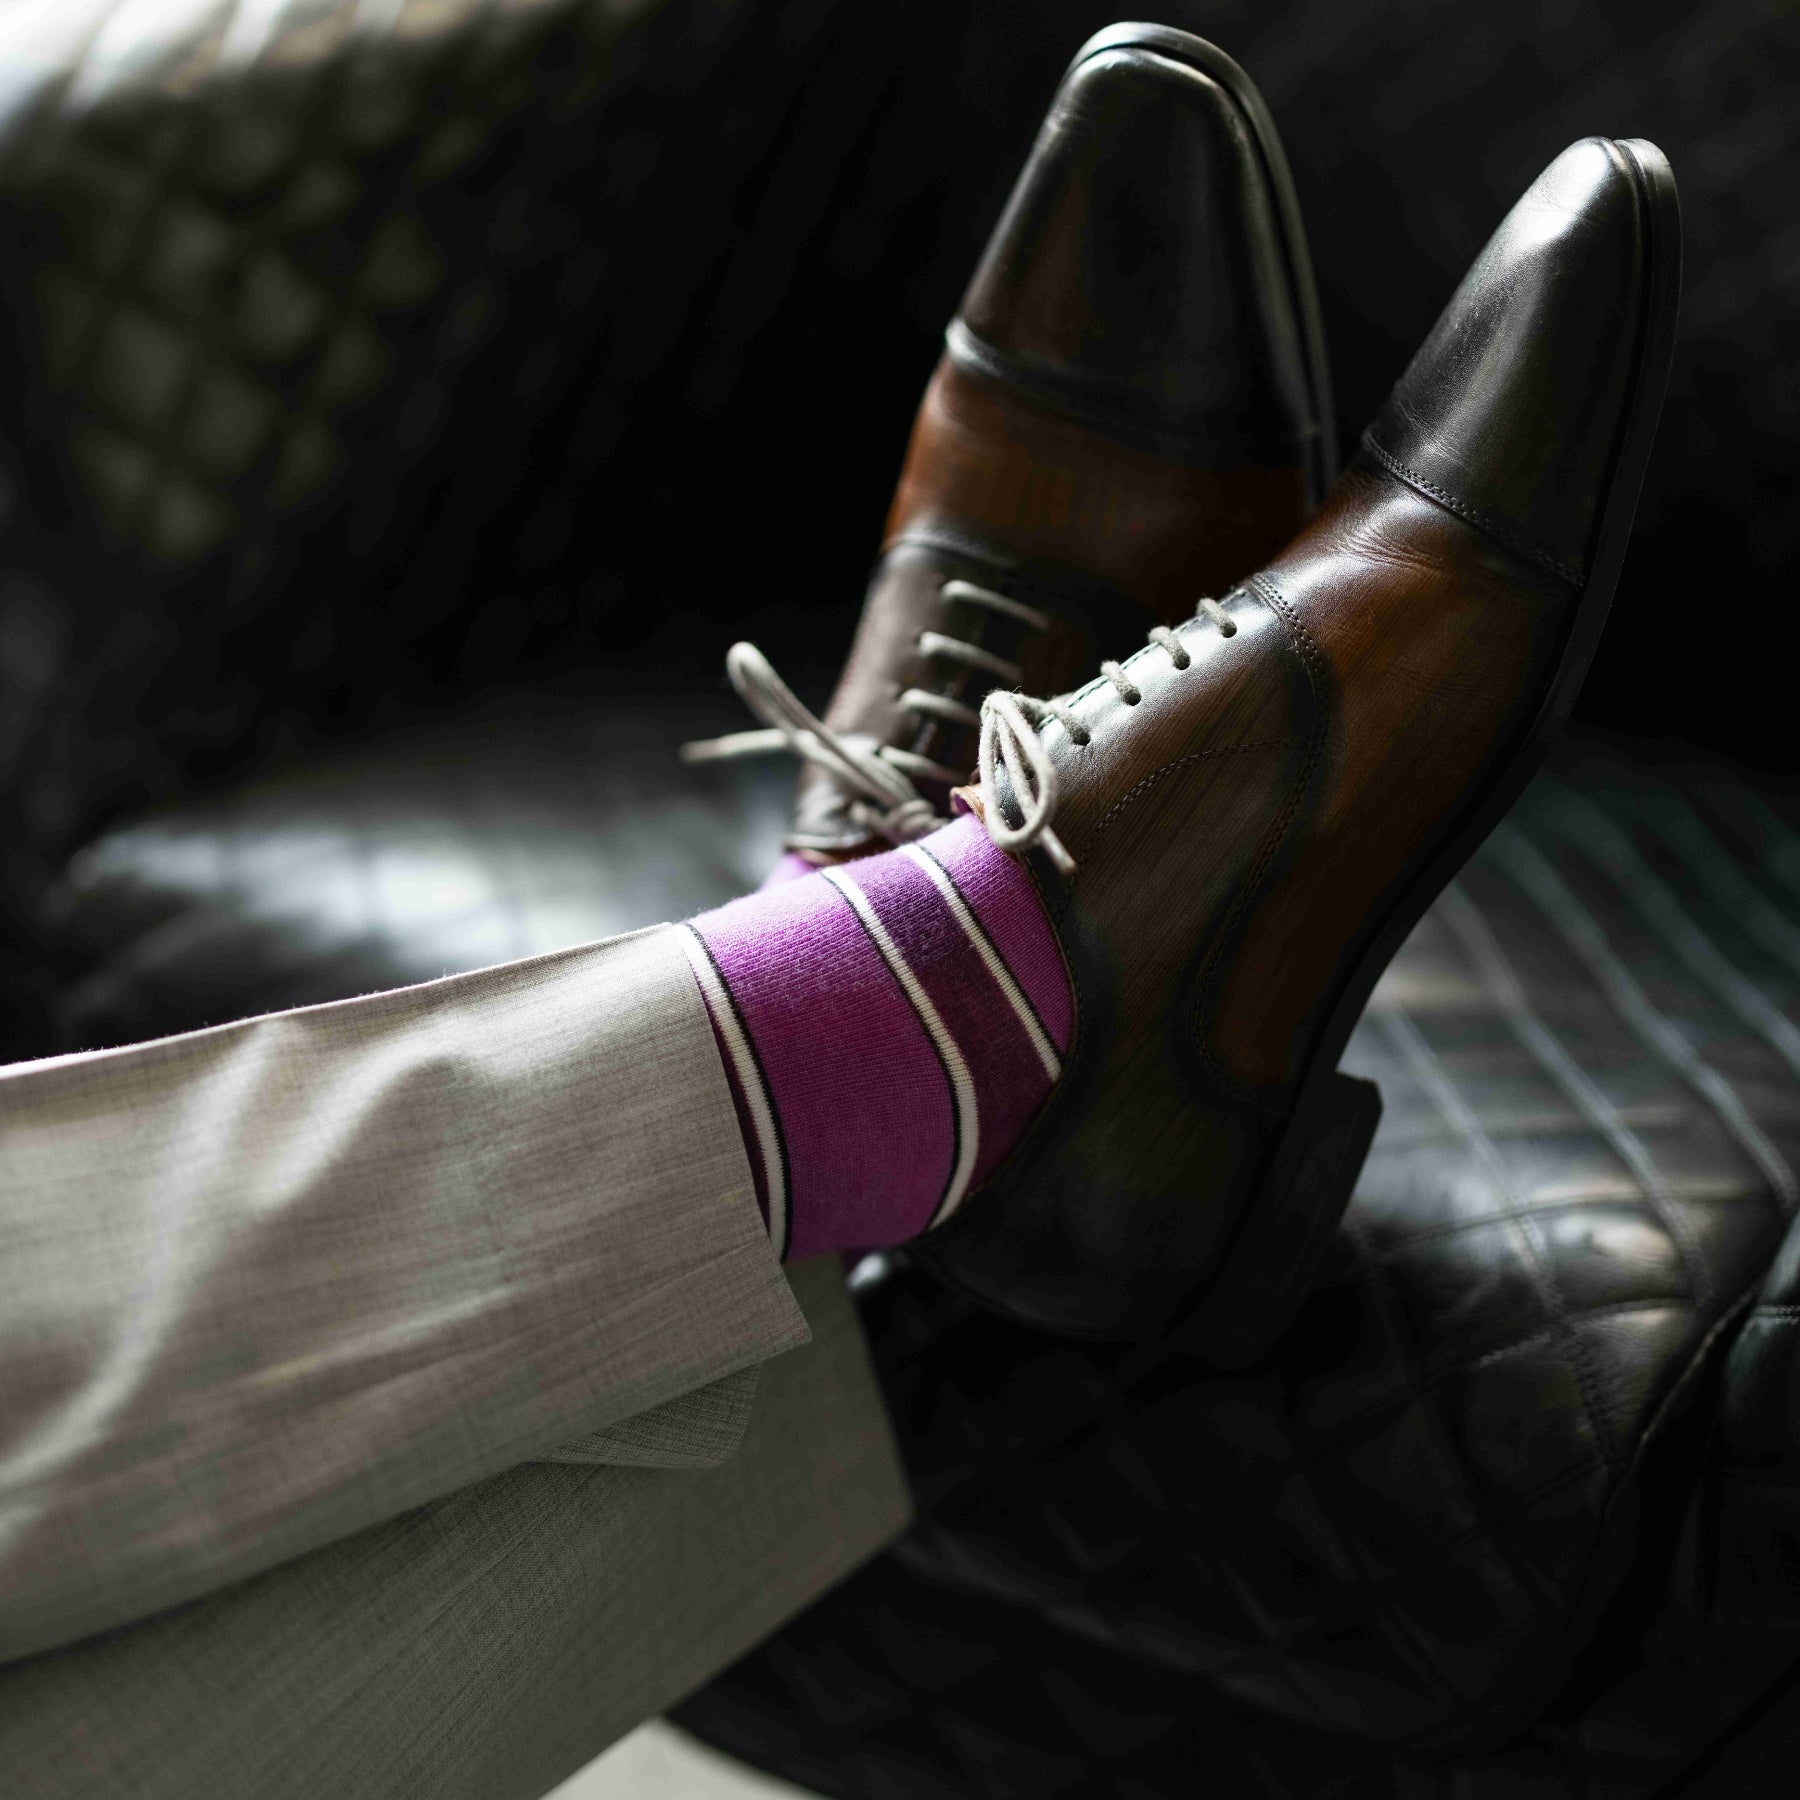 Purple, violet, and white striped men's dress socks